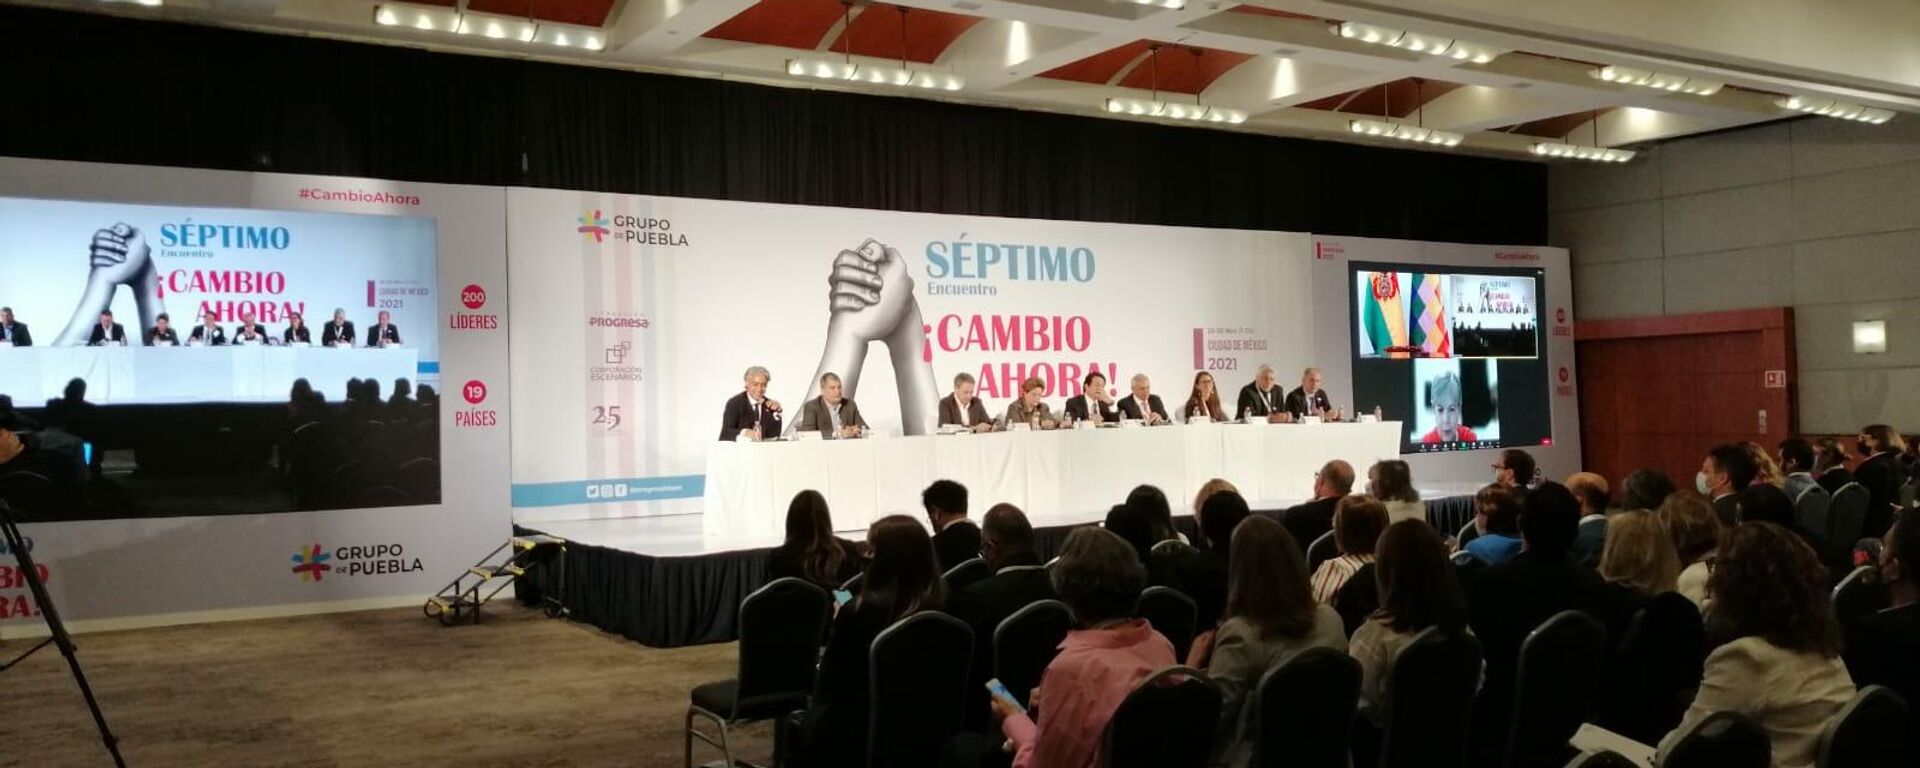 La séptima reunión del Grupo de Puebla celebrada en CDMX - Sputnik Mundo, 1920, 30.11.2021